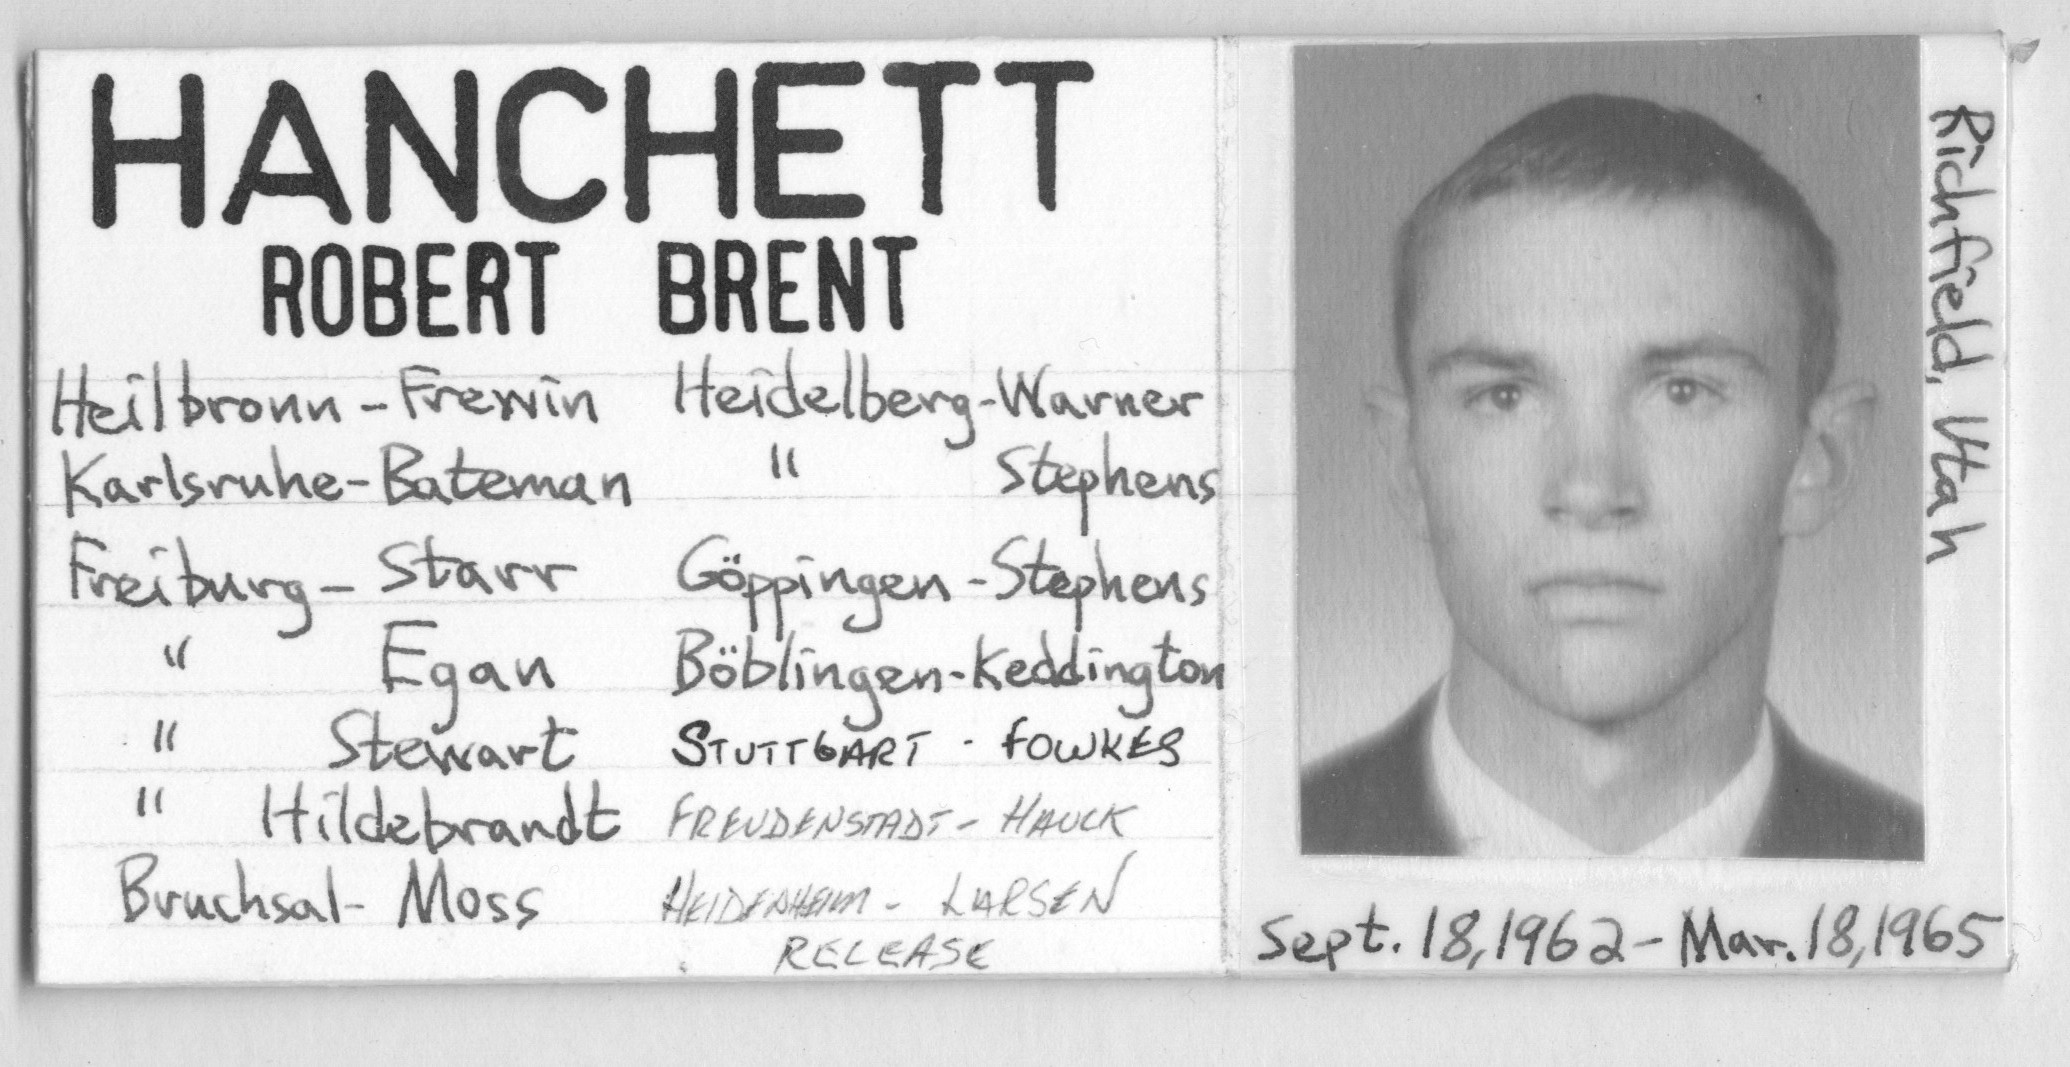 Hanchett, Robert Brent